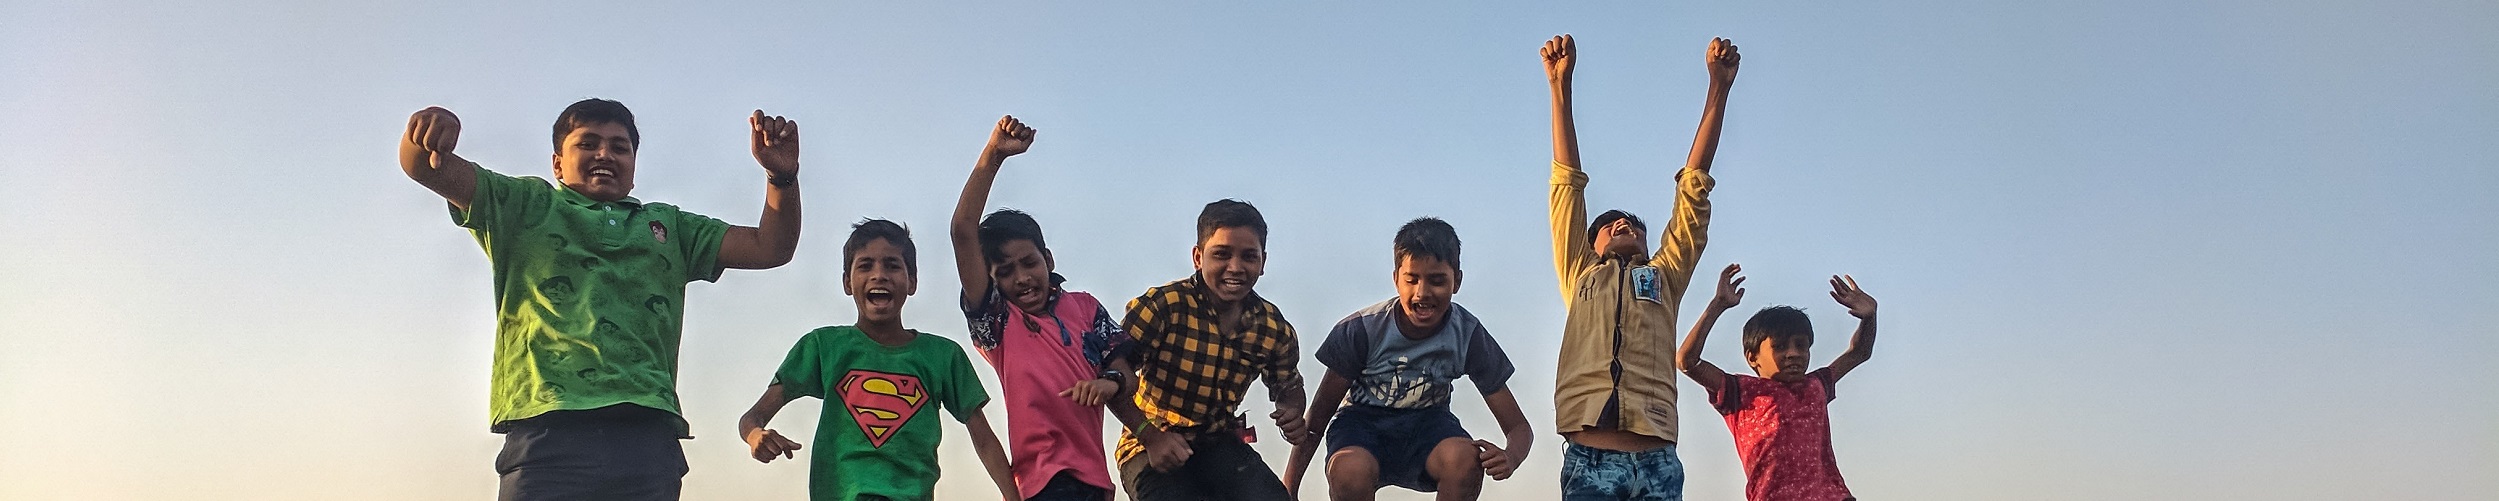 Children, mid-air, jumping